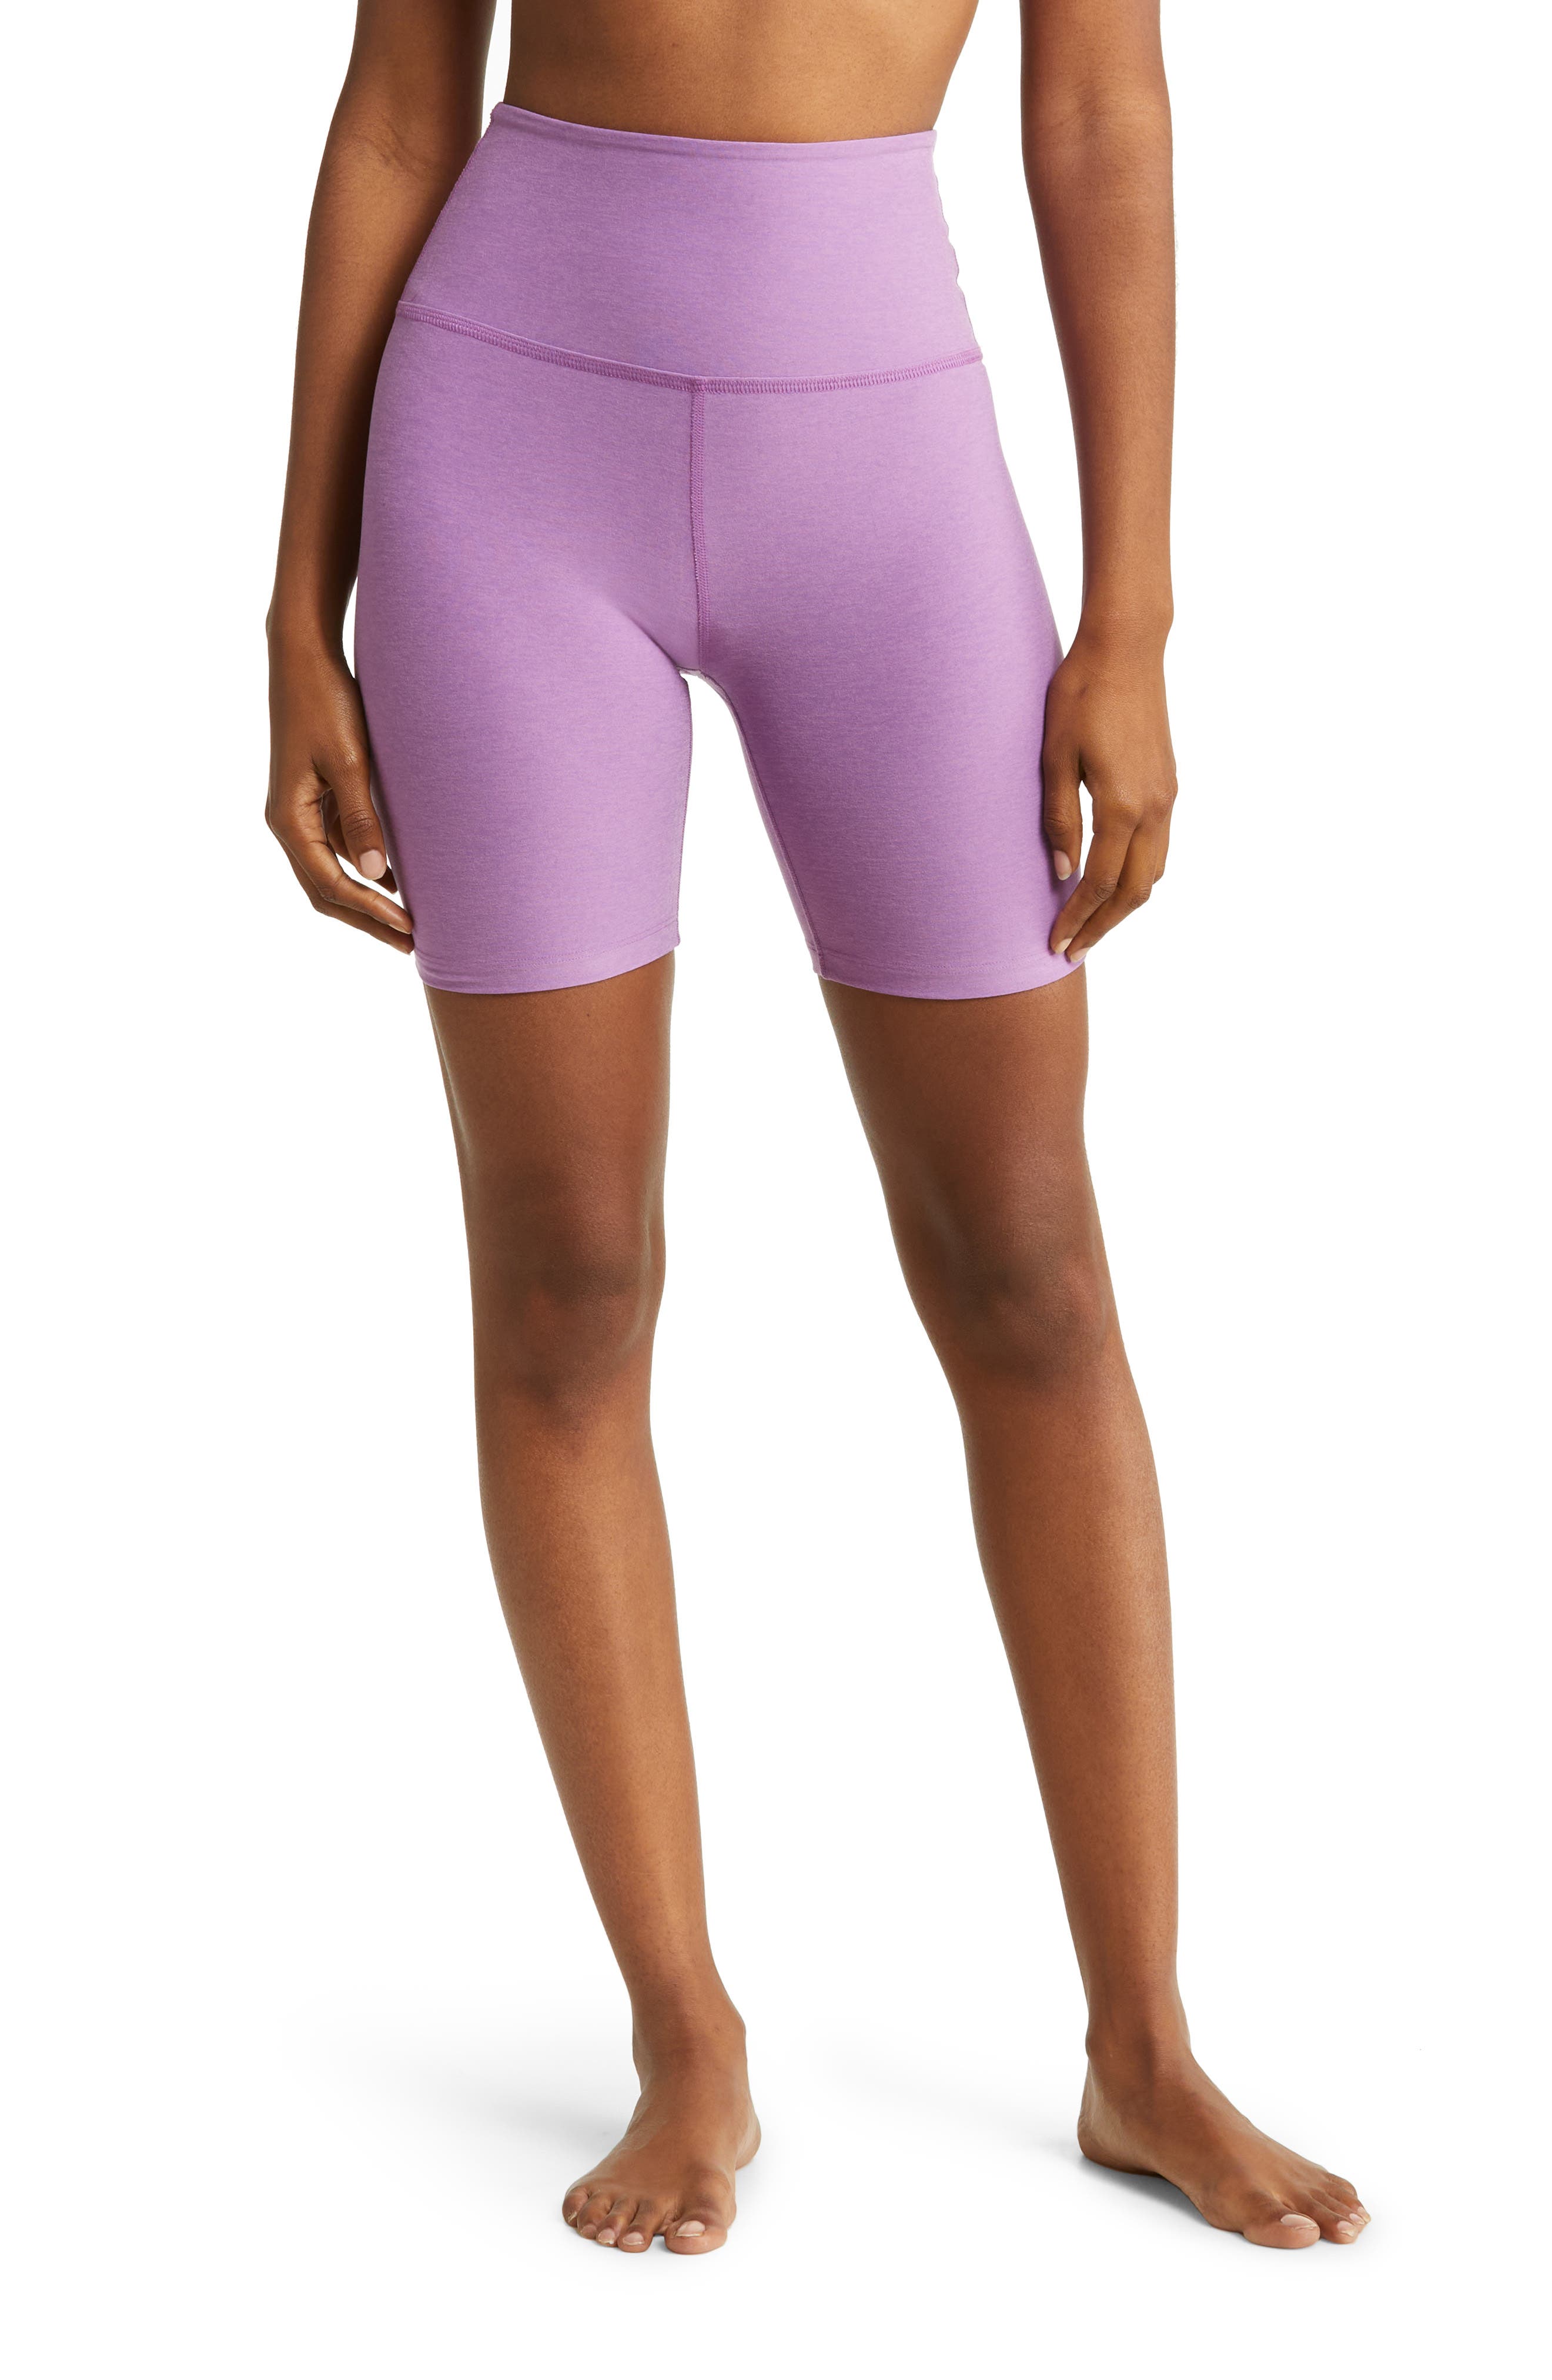 JINRS Biker Shorts for Women,High Waisted Print Yoga Workout Compression Shorts Yoga Shorts for Running Shorts Side Pockets 